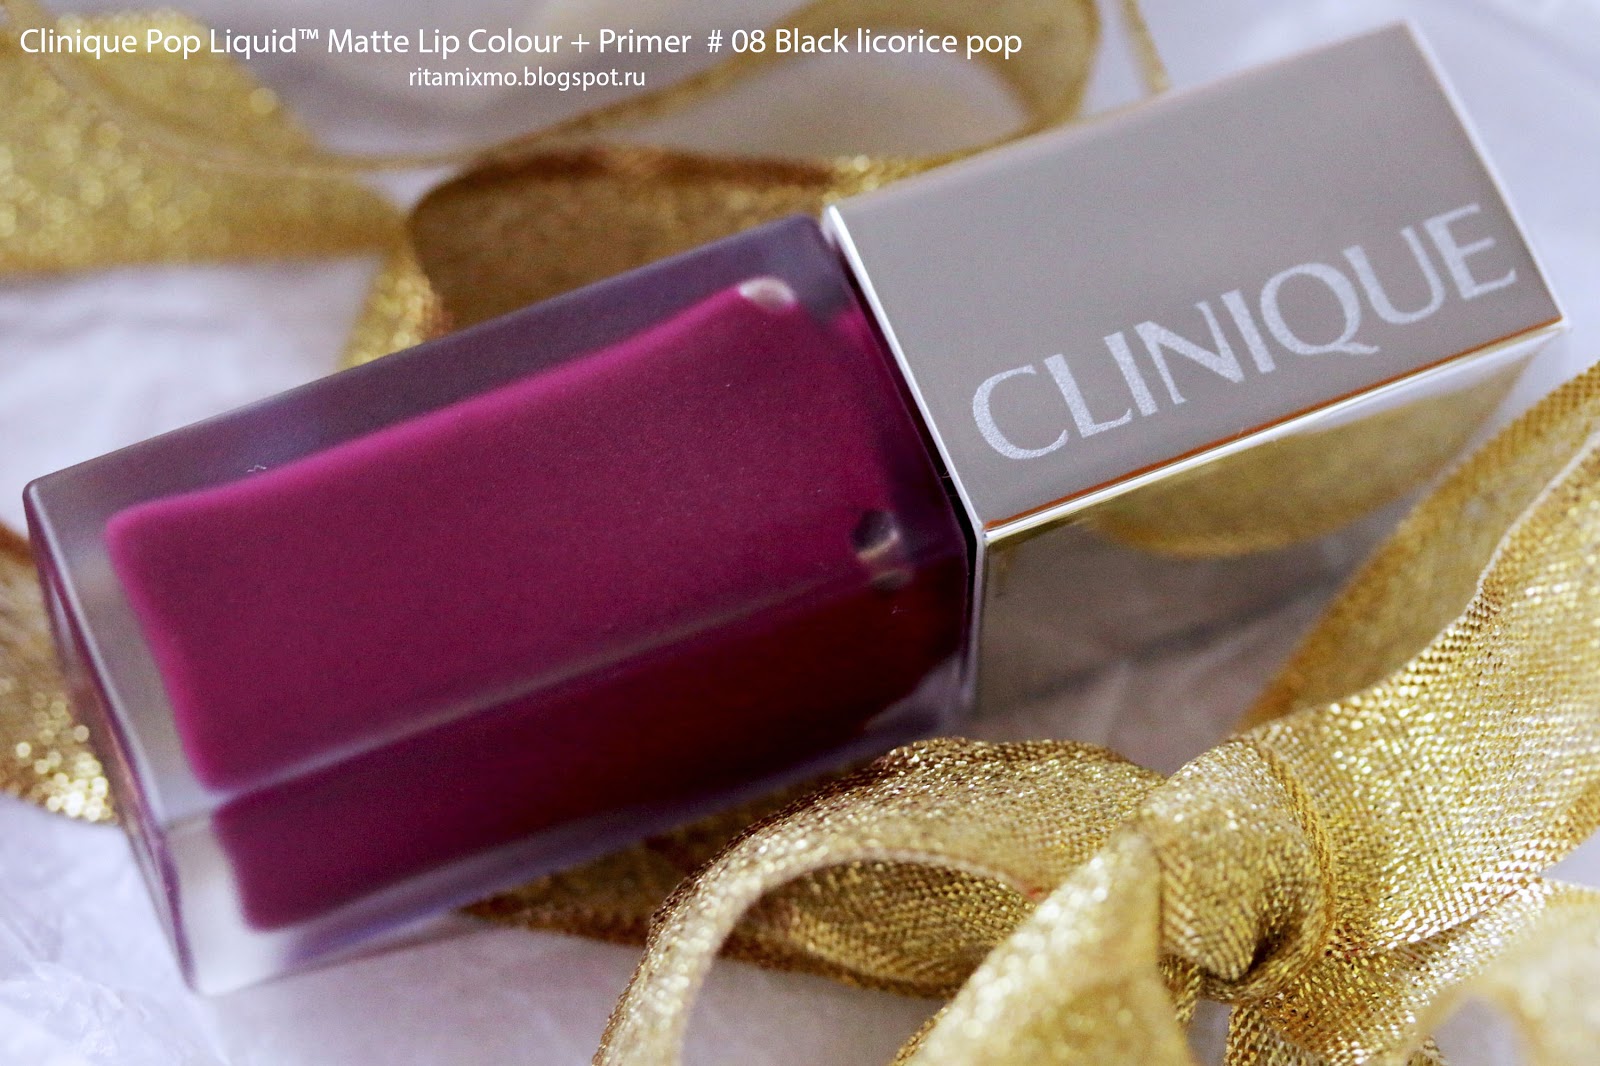 Обзор на clinique pop liquid matte lip colour + primer: свотчи и отзывы